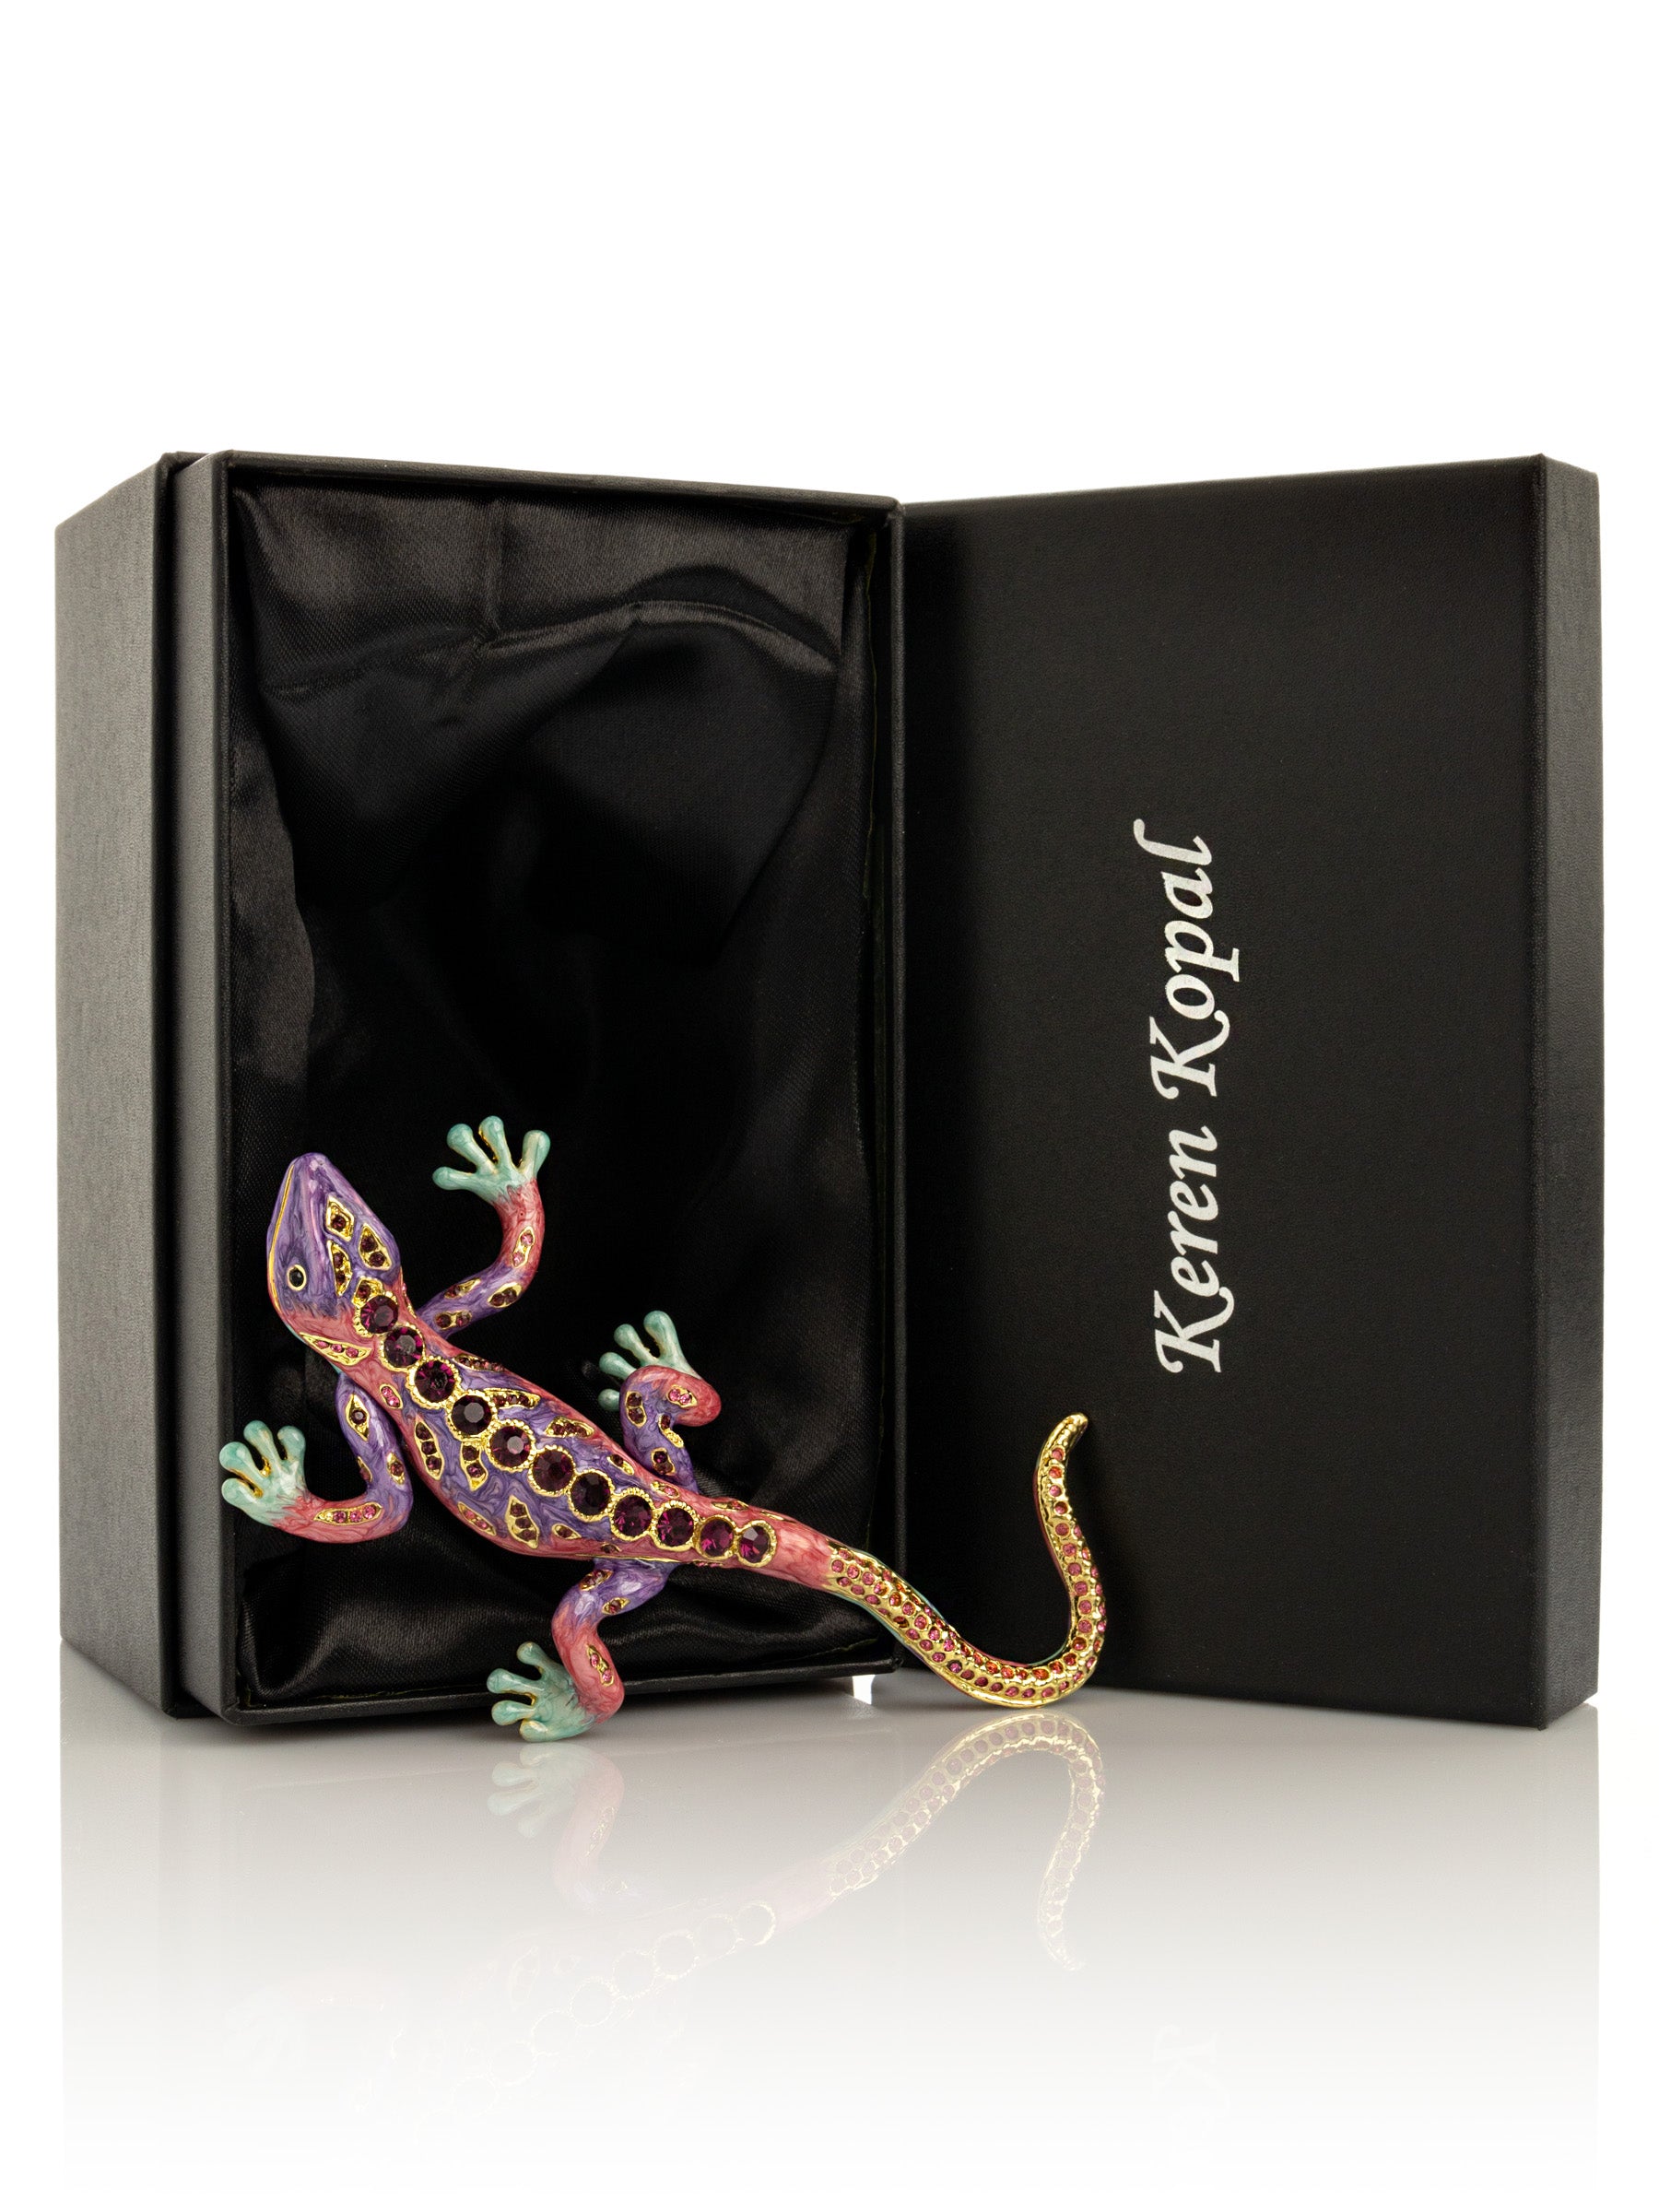 Purple Lizard Jewelry Trinket Box